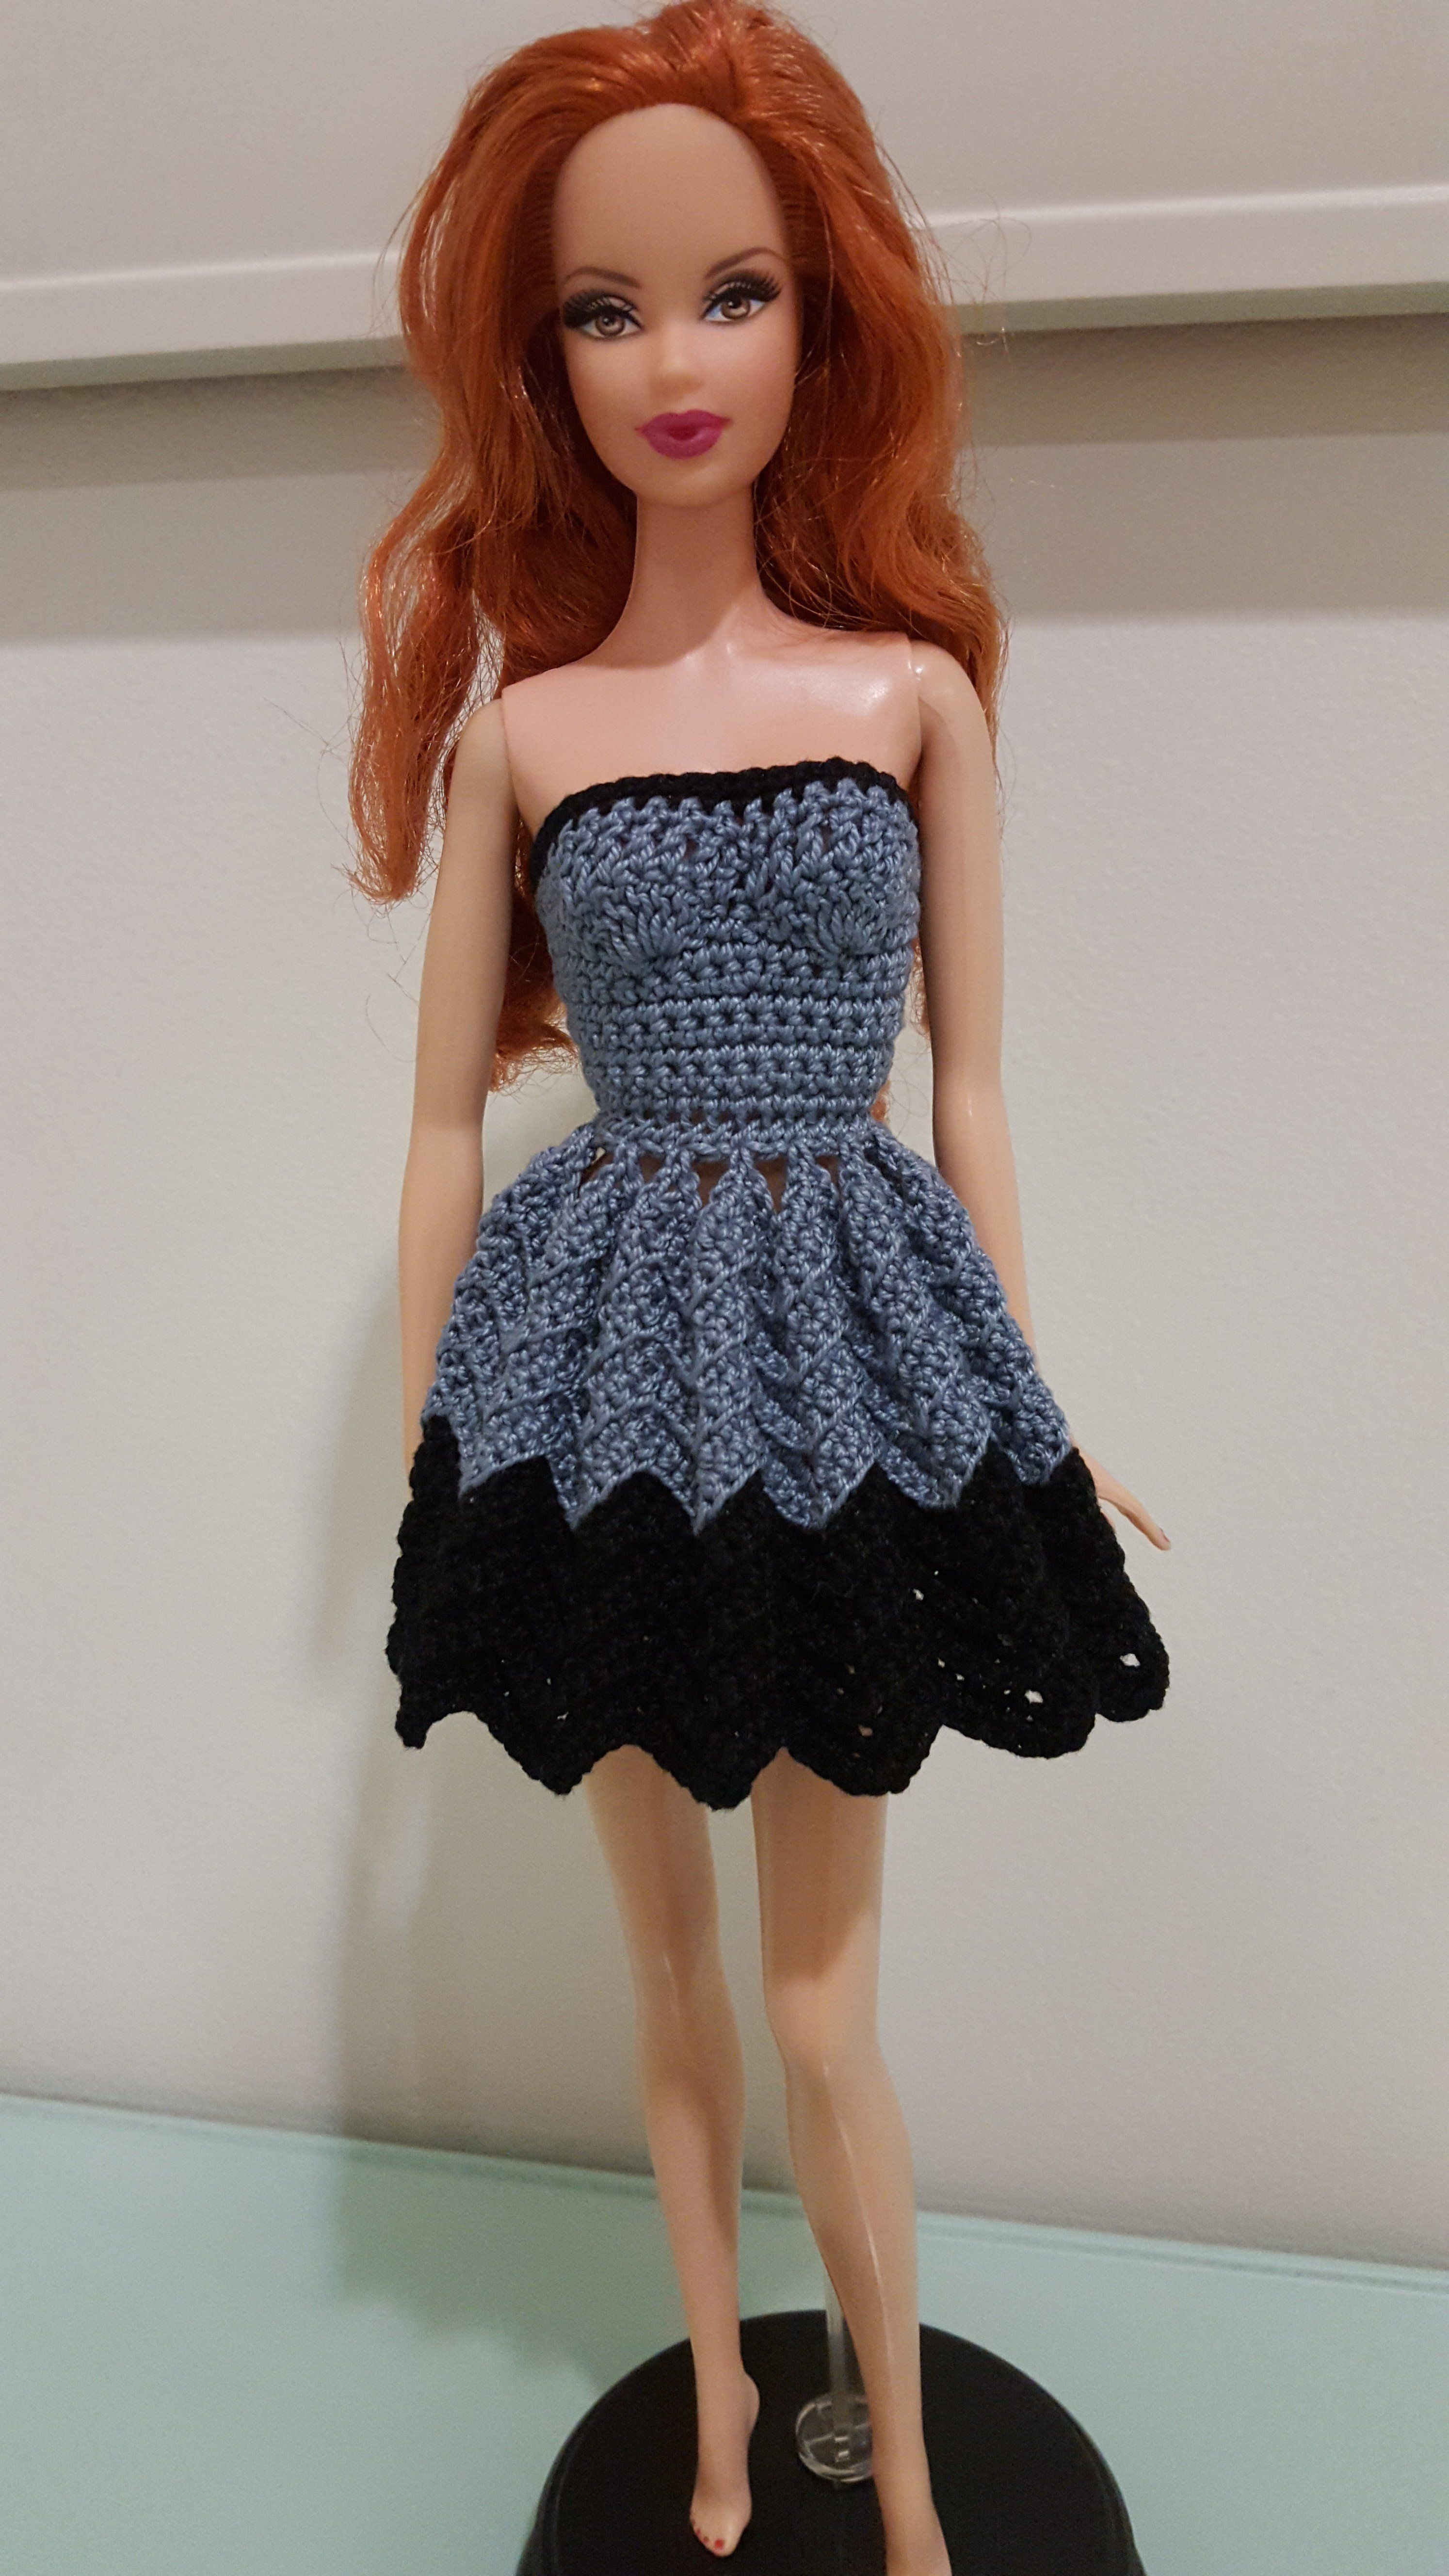 Crochet Doll Dress Patterns For Barbies Barbie Strapless Chevron Dress Free Crochet Pattern Crochet